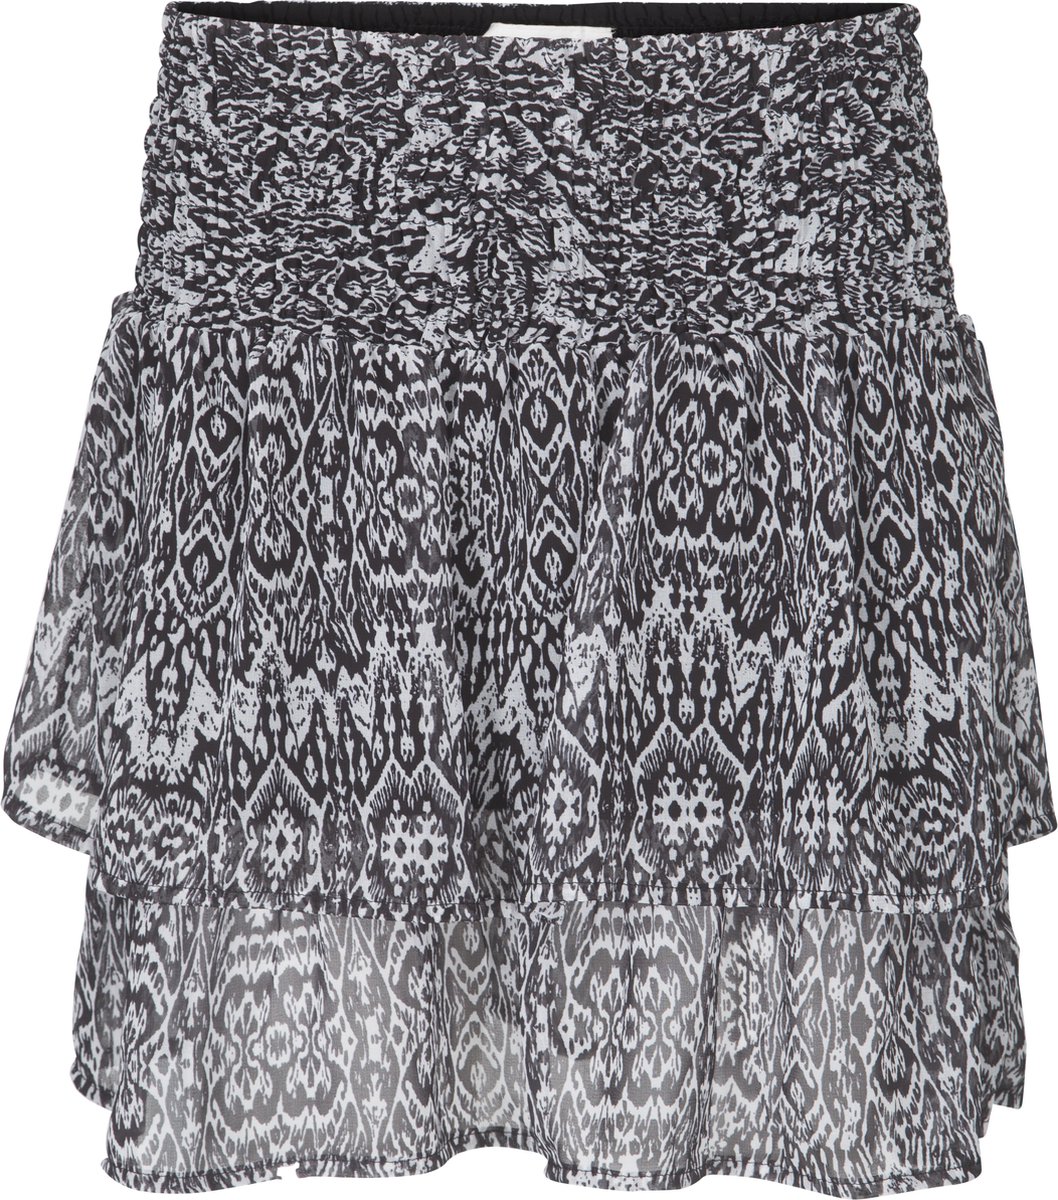 Les Icônes - Elegance Skirt - Rok - Zwart - Dessin - 40/42